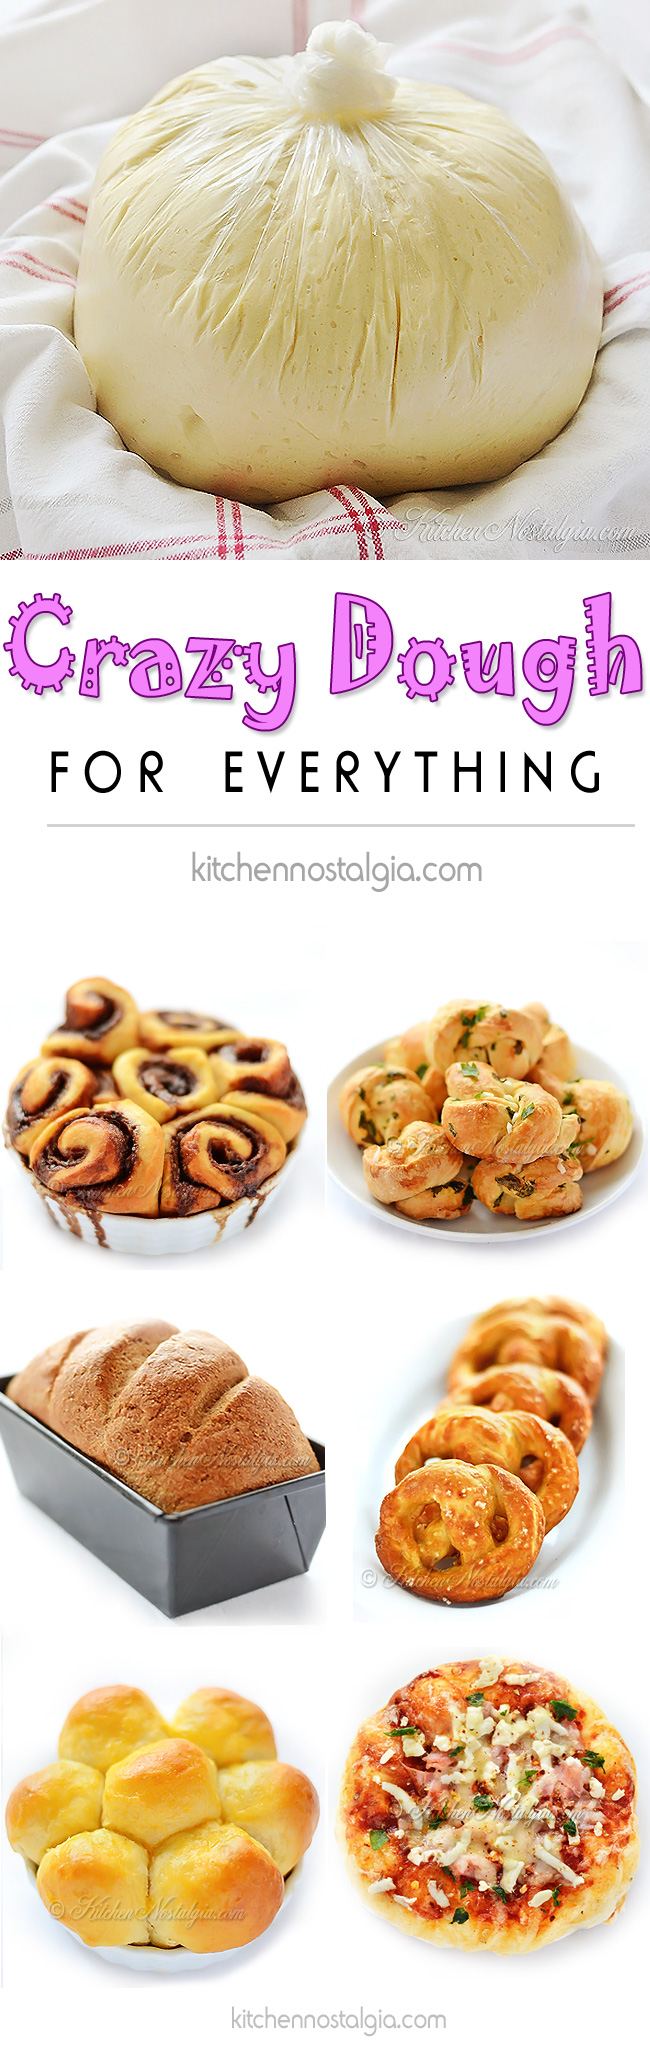 Crazy Dough for Everything - by kitchennostalgia.com